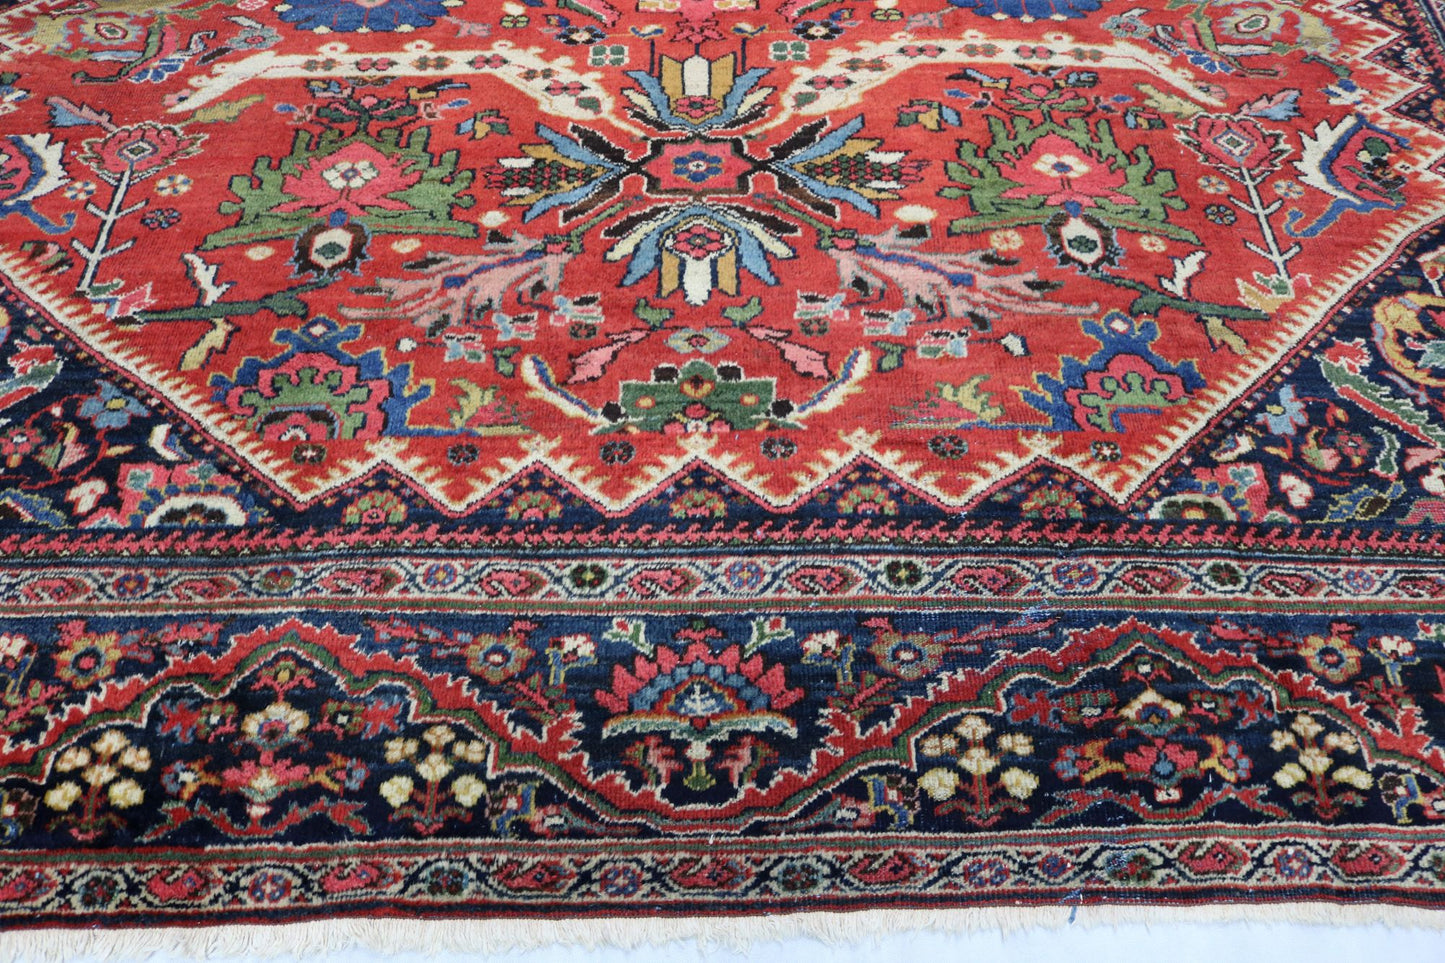 Antique Persian Mahal Carpet